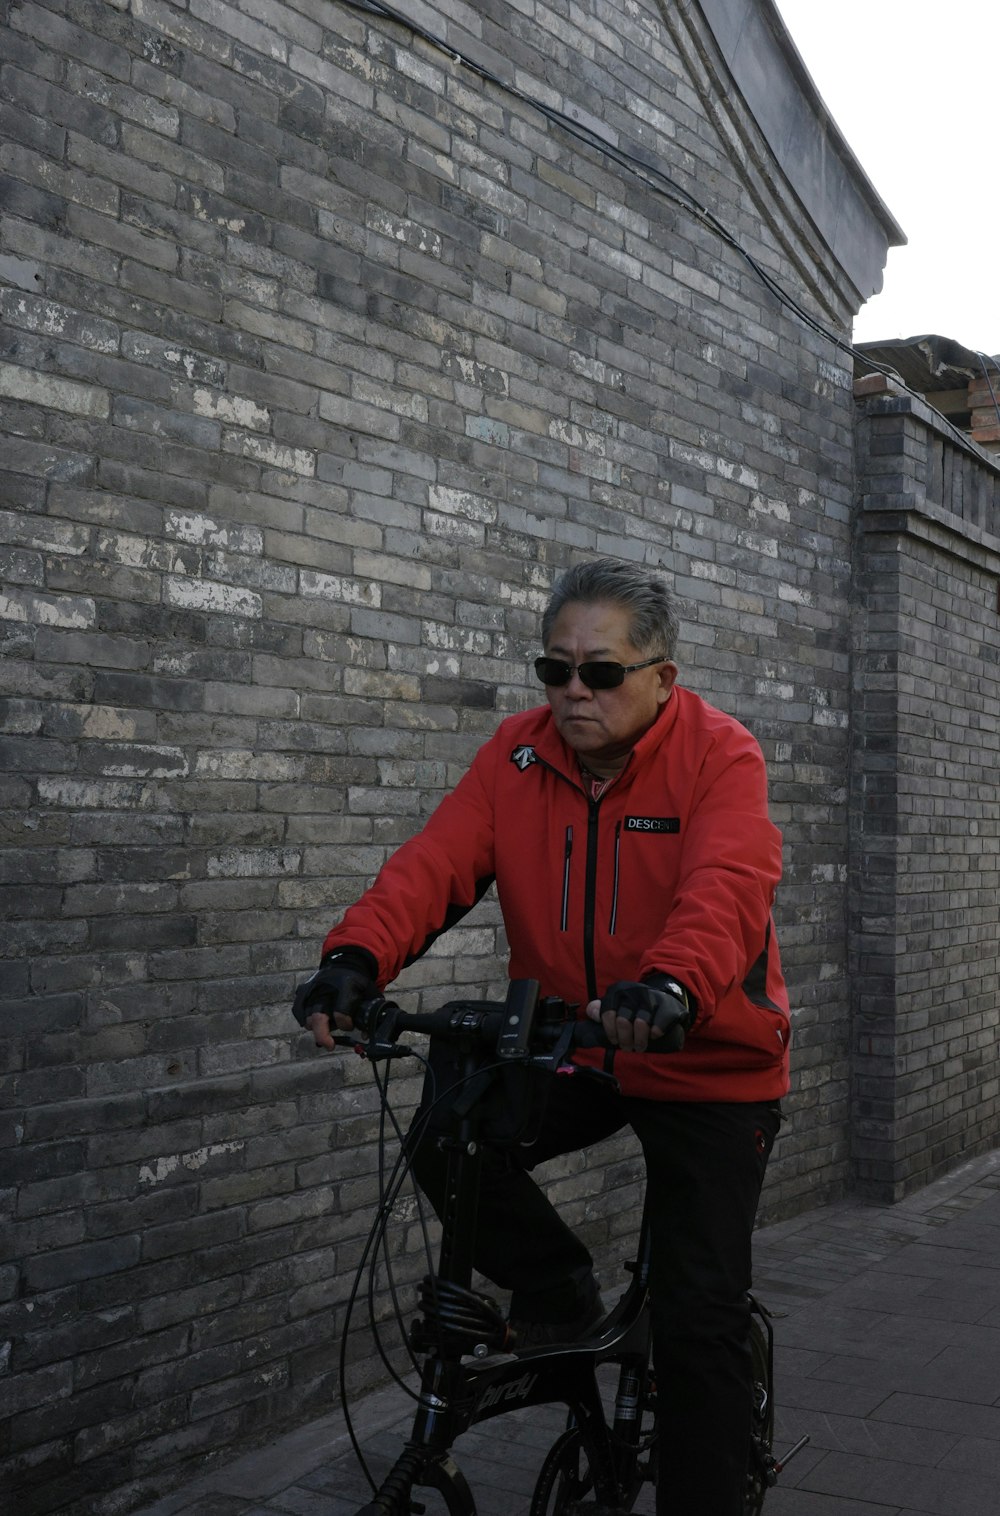 a man riding a bike down a street next to a brick wall